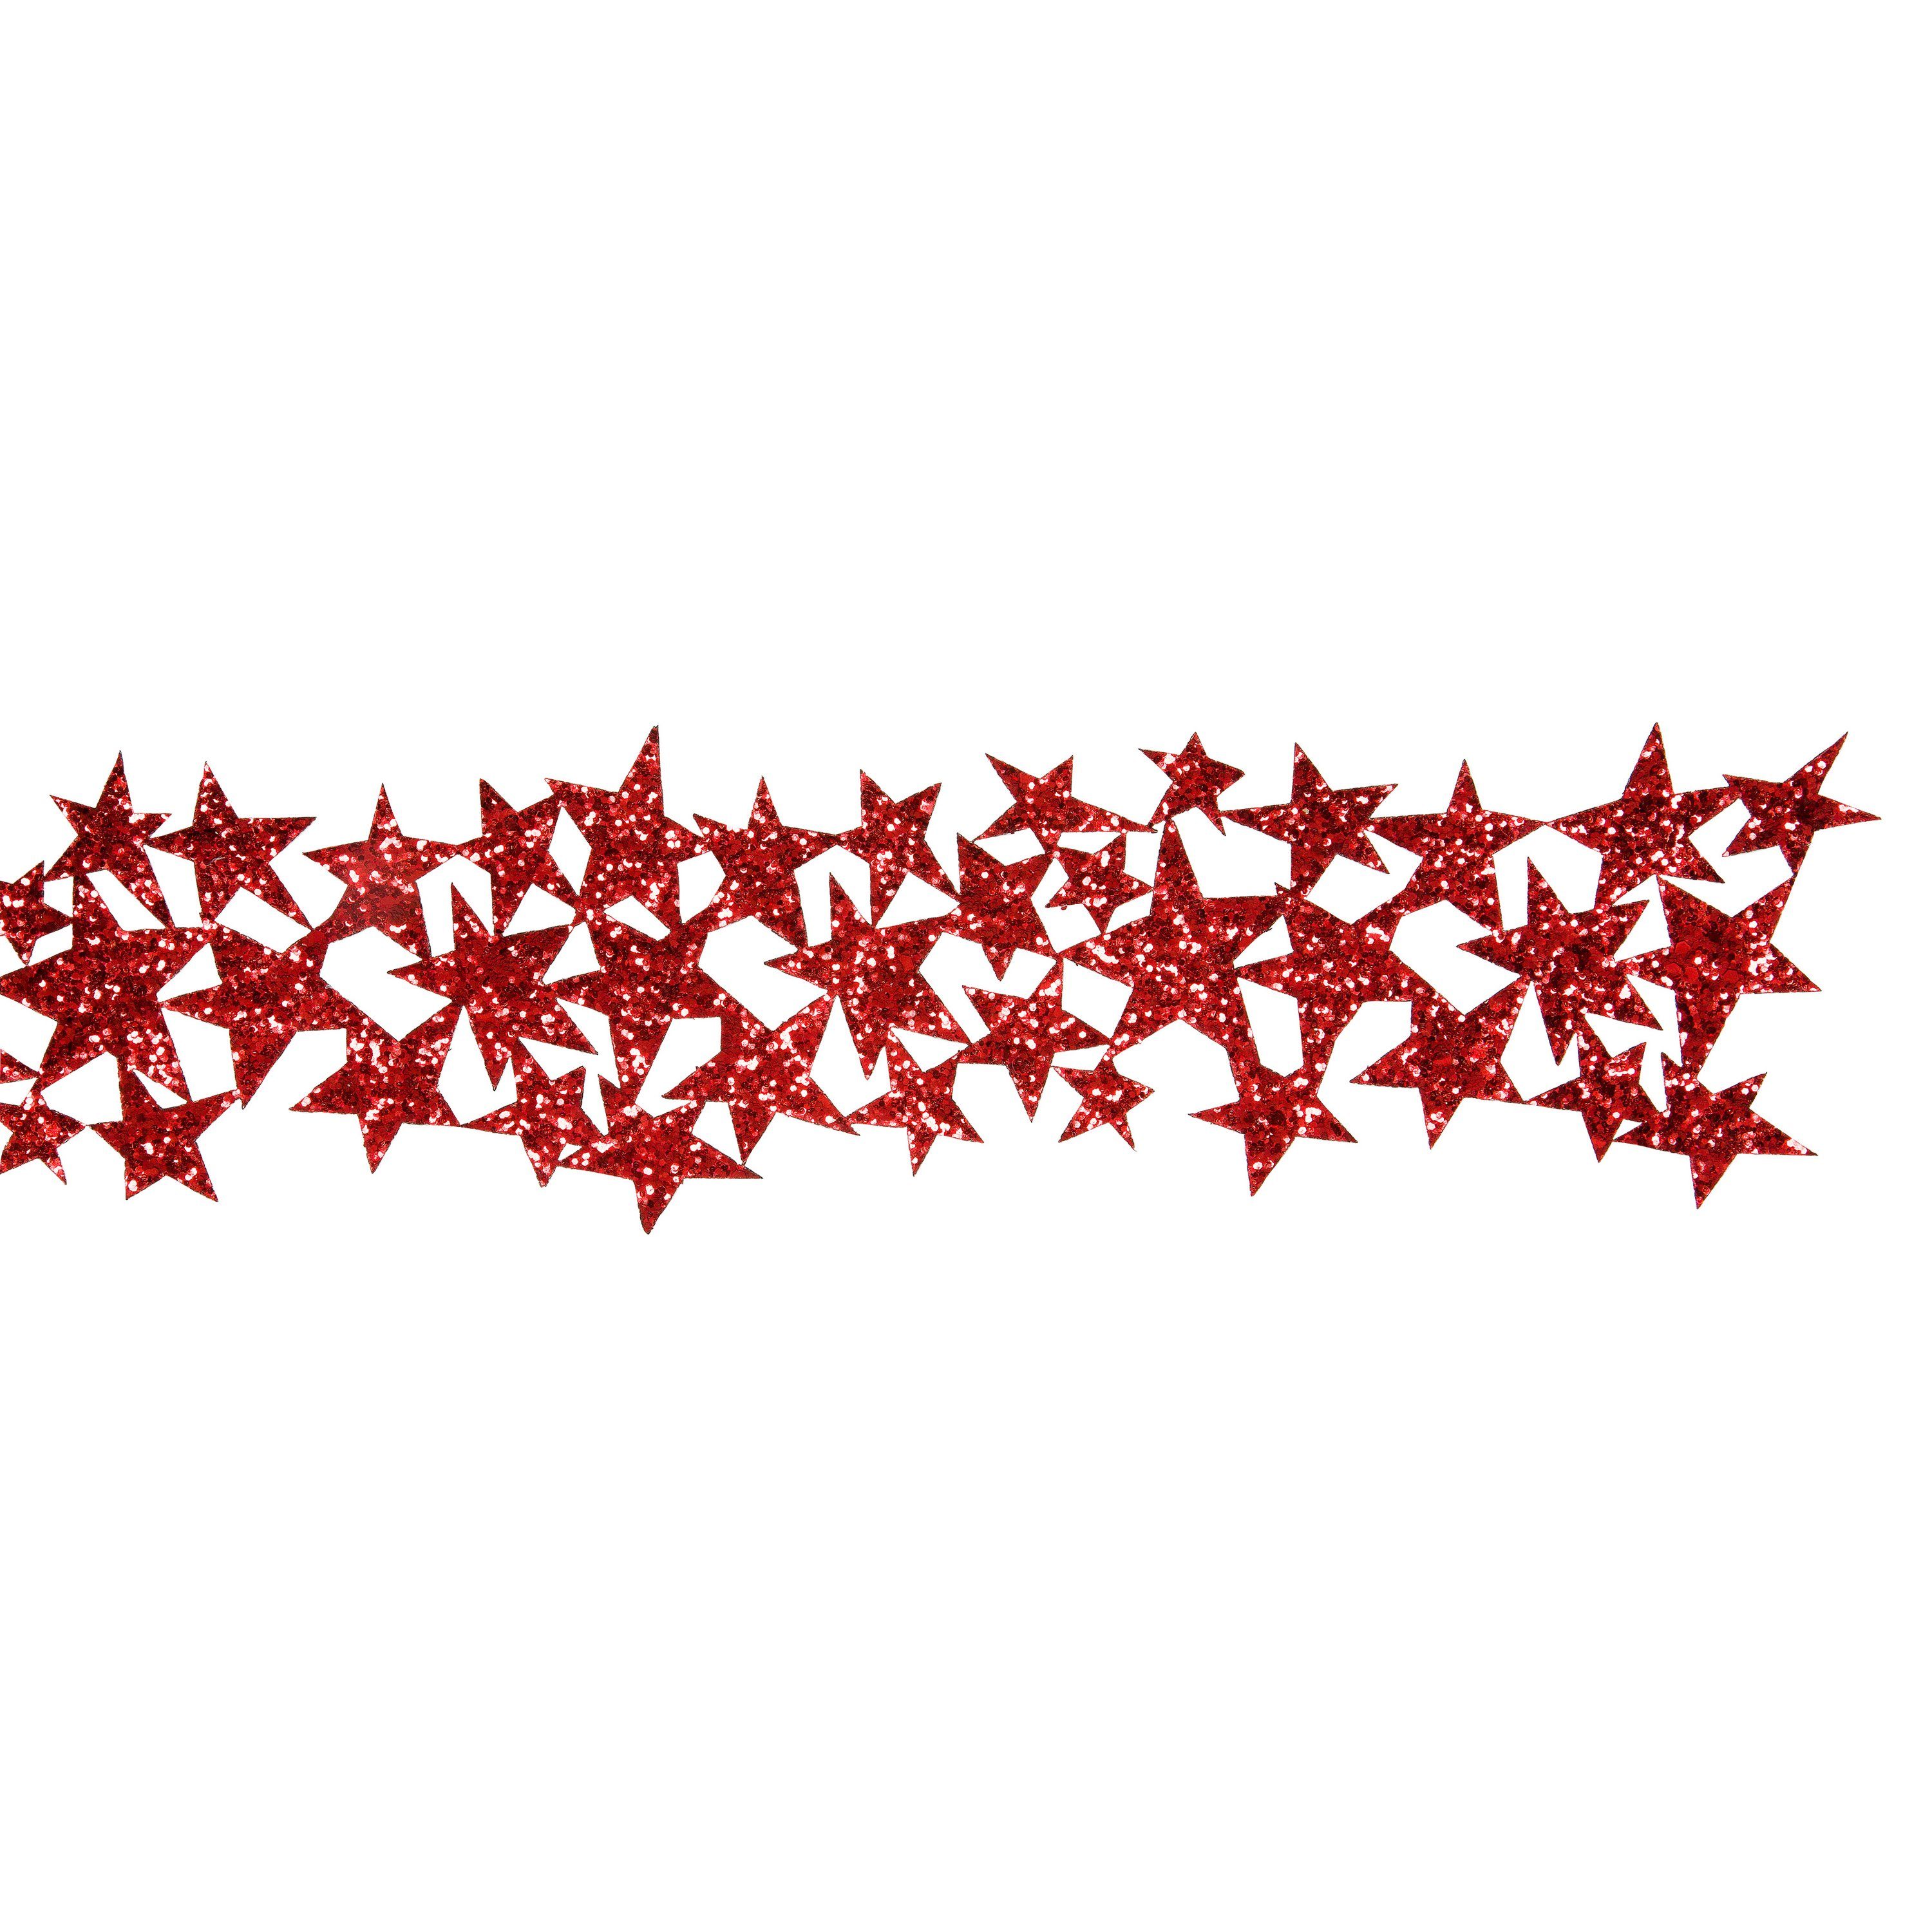 HALBACH Packpapier Glitterband Sterne lang Rot mm, m 1 90